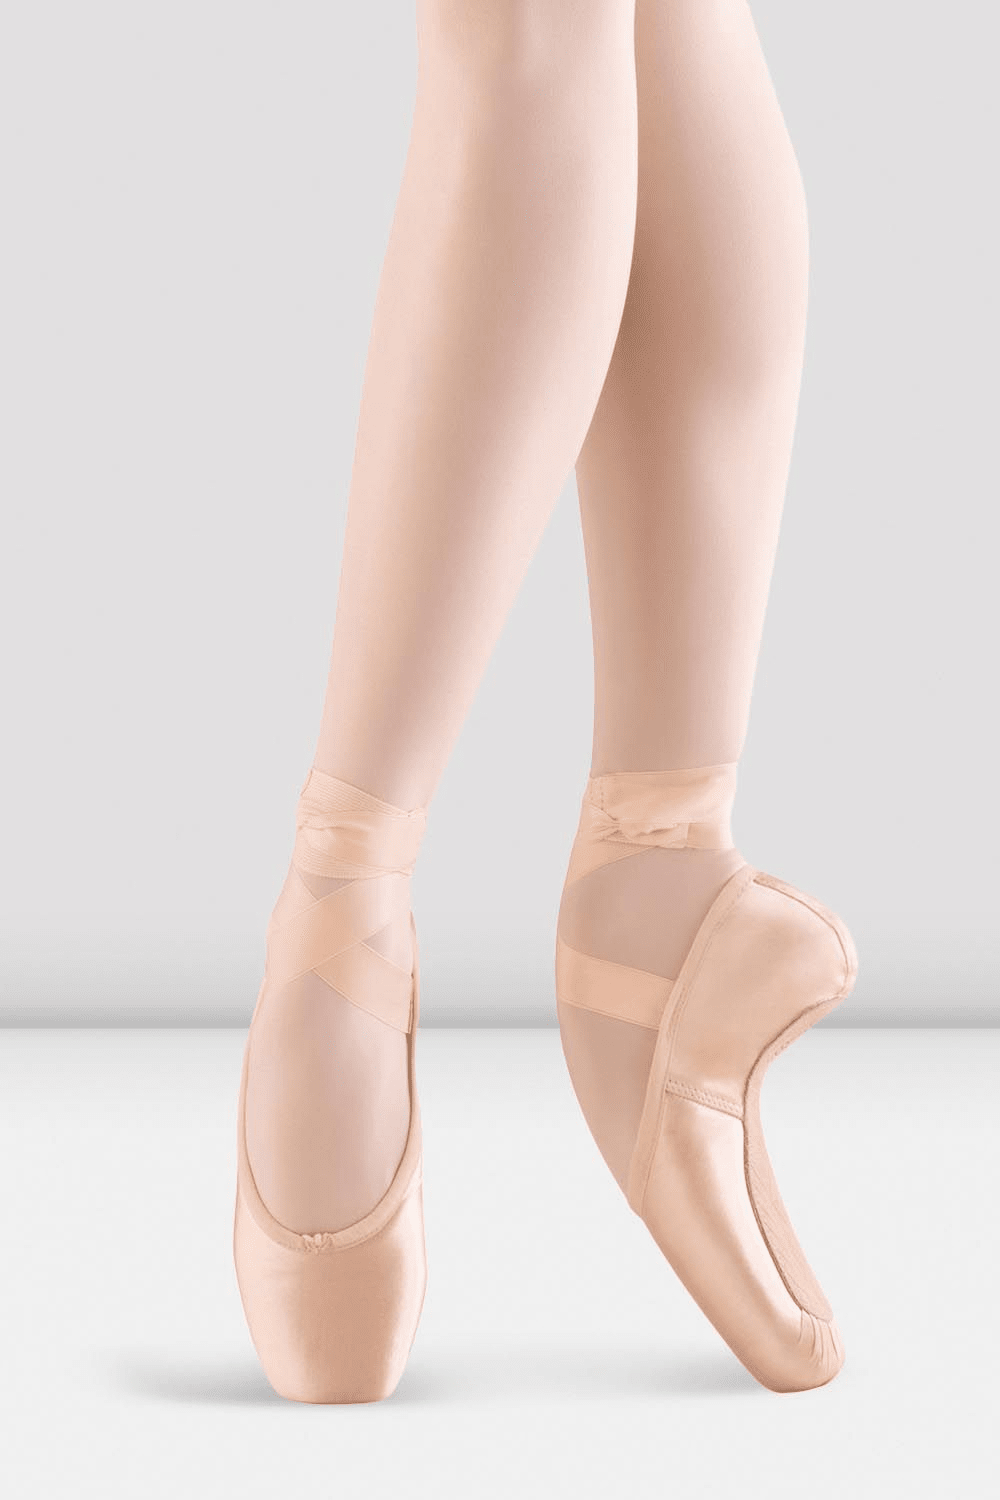 Bloch Satin Toe Pointe shoes Ribbon & Elastic in box Aspiration S0105L 5  widths